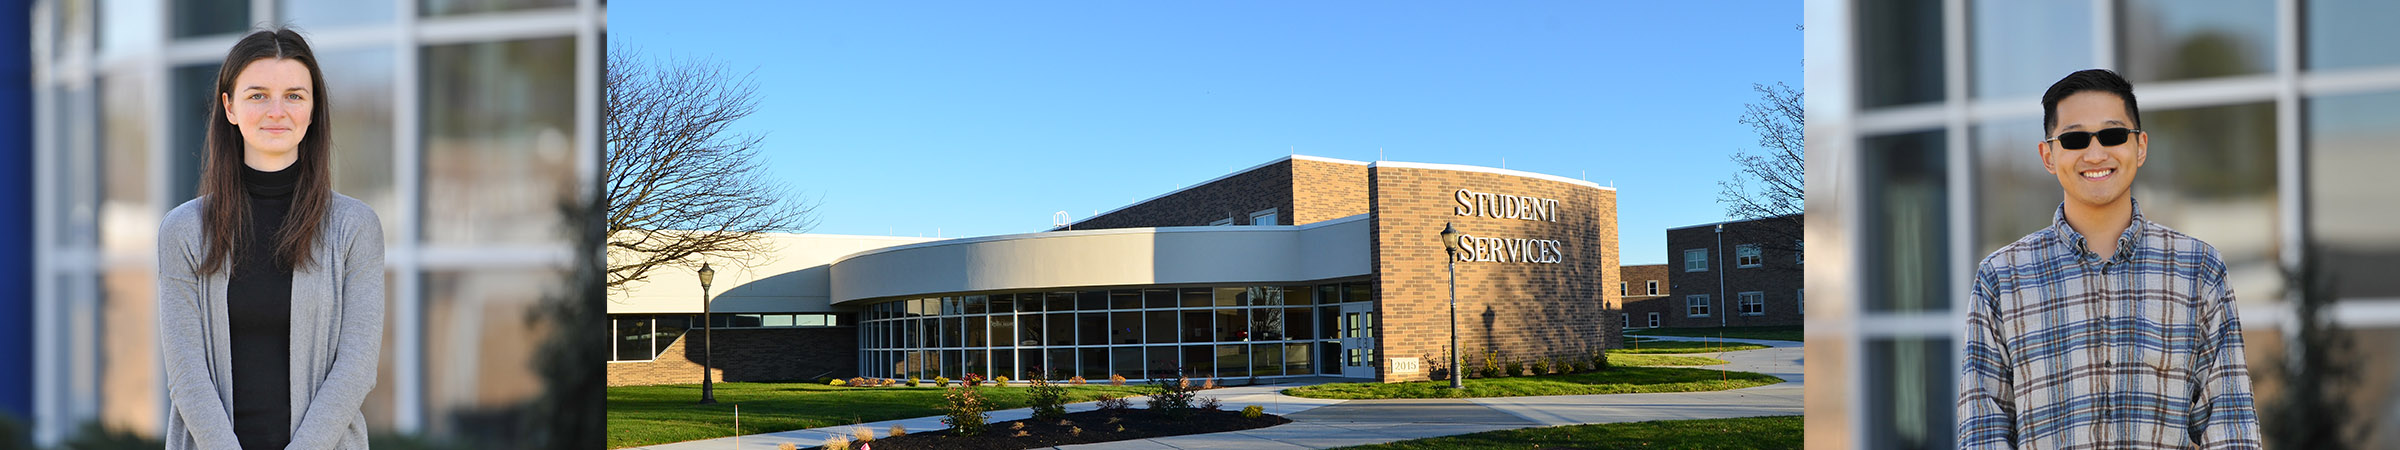 View of RCSJ's healthcare building